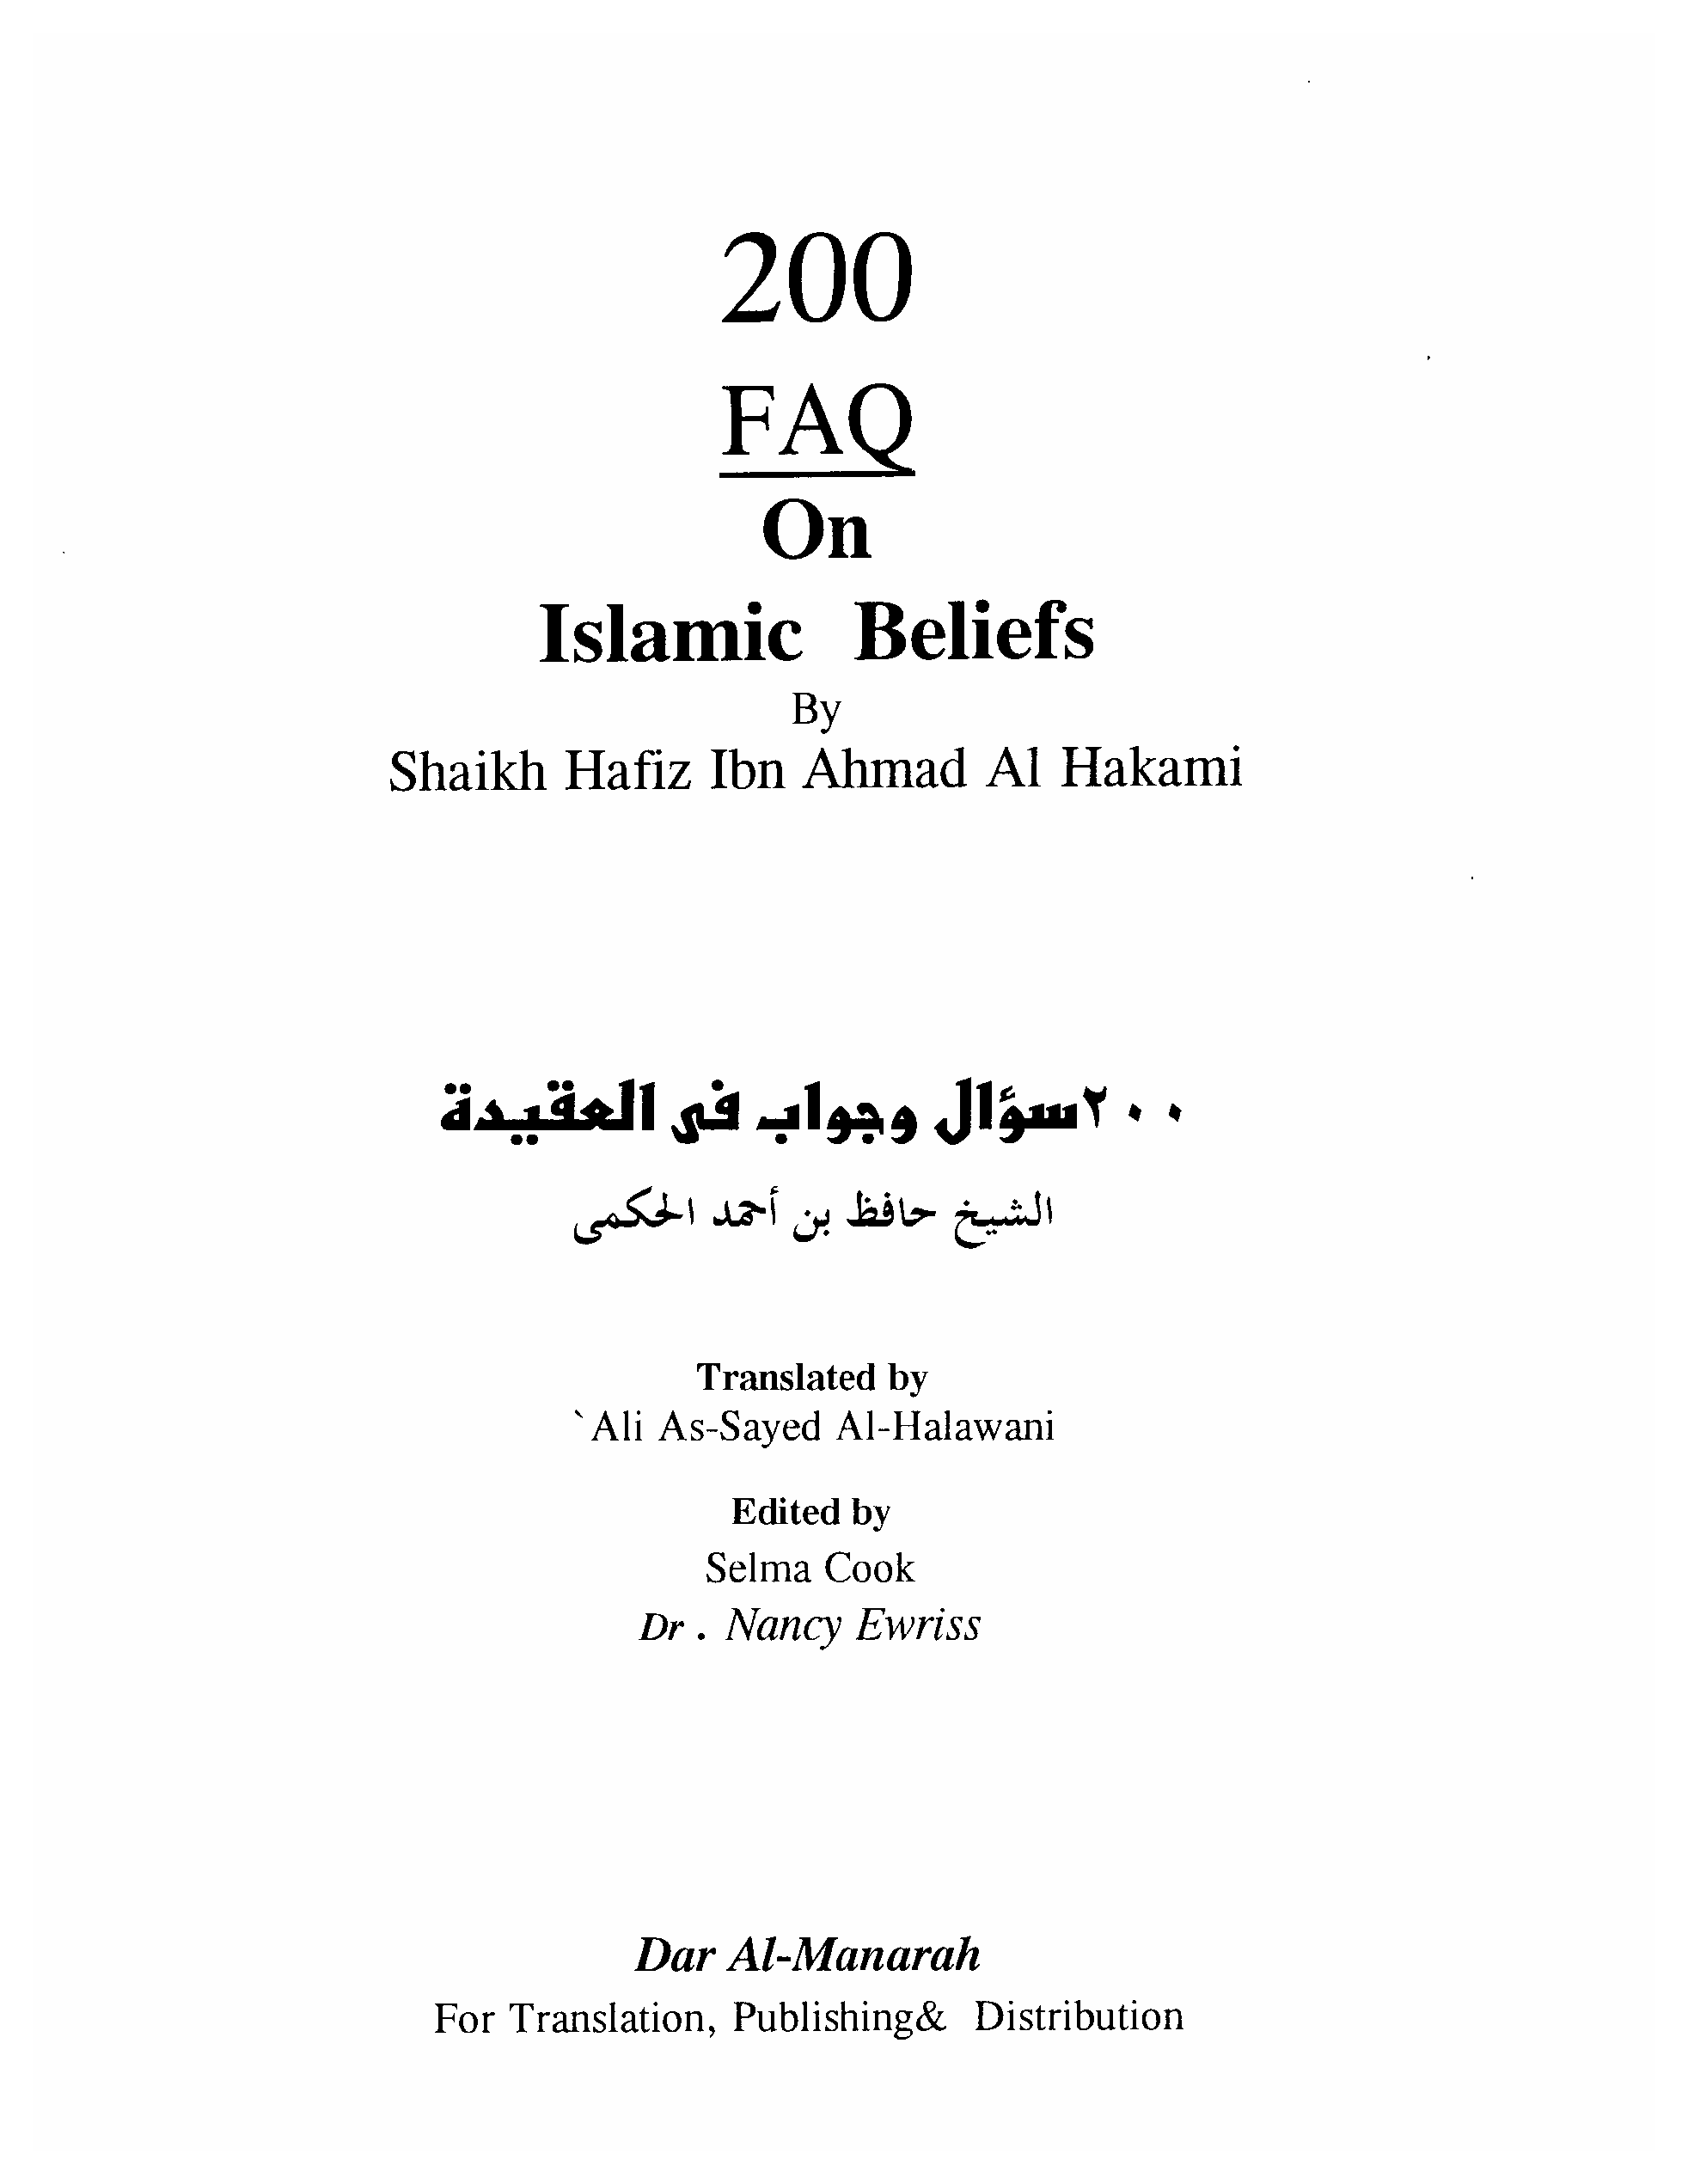 200 FAQ on Islamic Beliefs